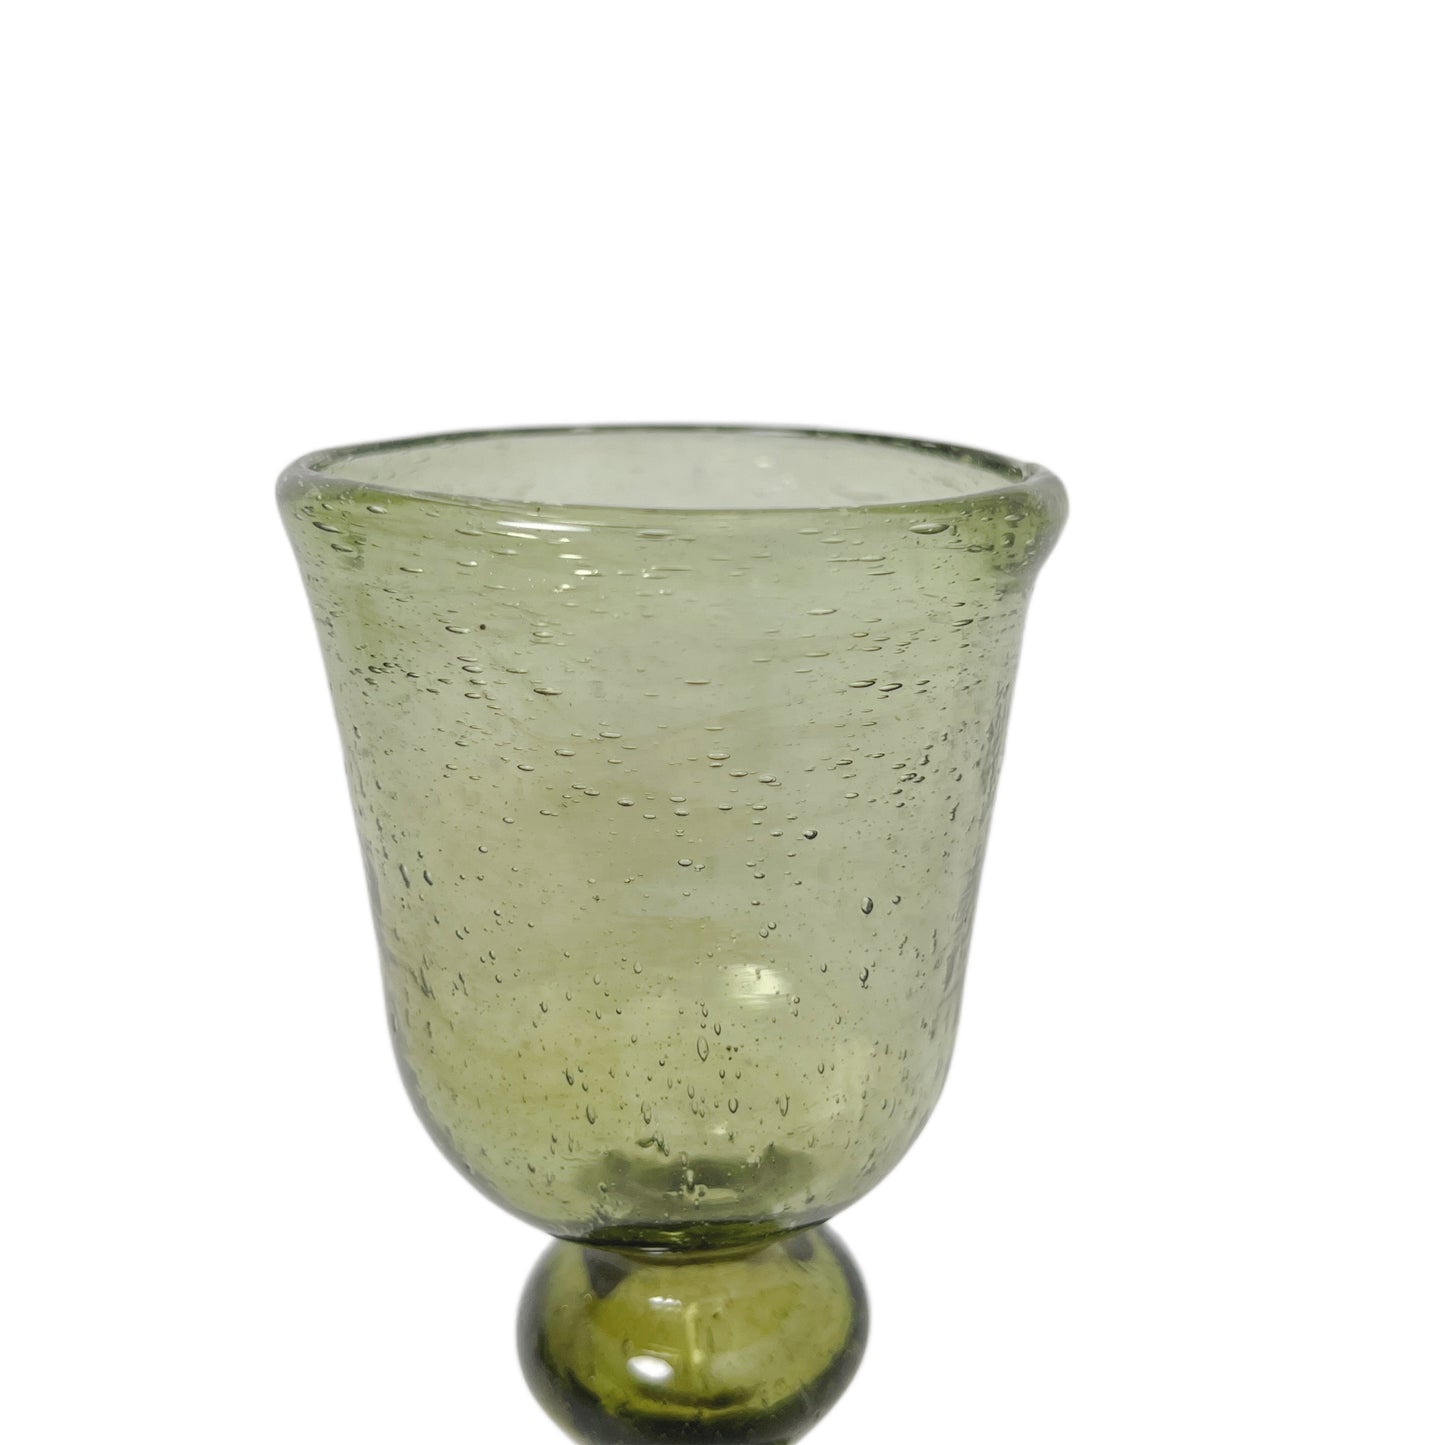 【La Soufflerie】ワイングラス White Wine Glass Vert Fume